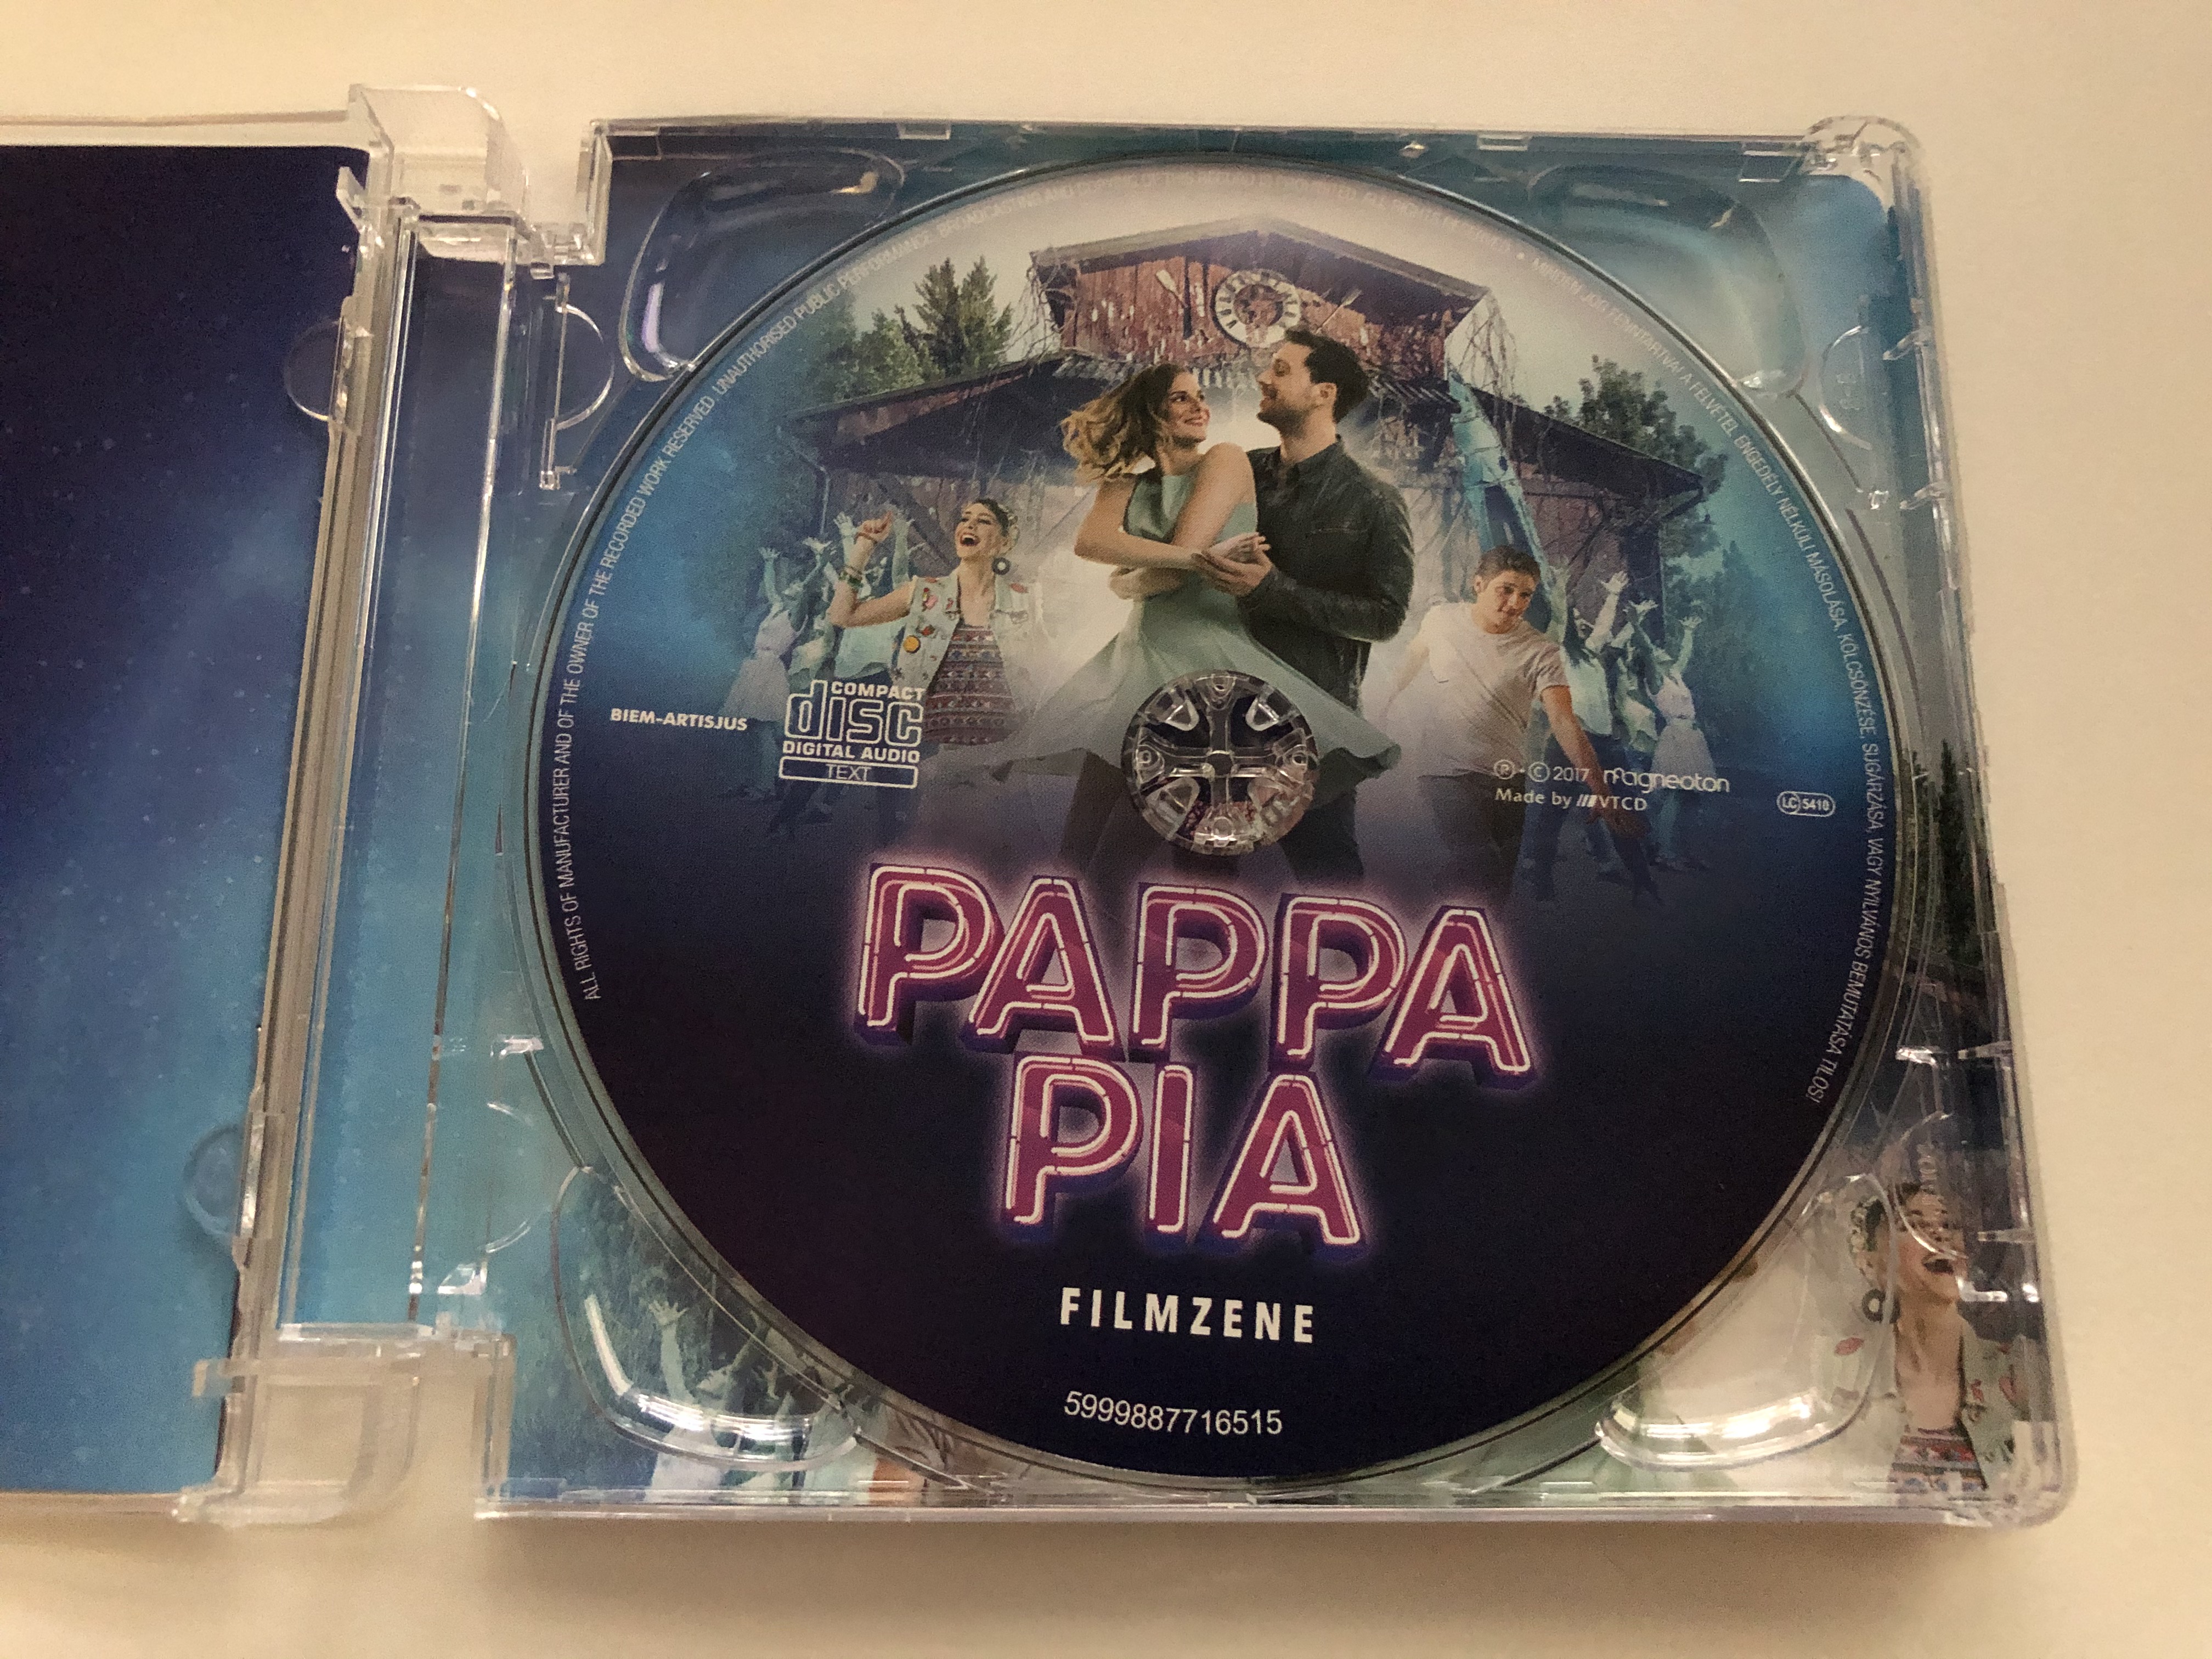 pappa-pia-filmzene-magneoton-audio-cd-2017-5999887716515-4-.jpg